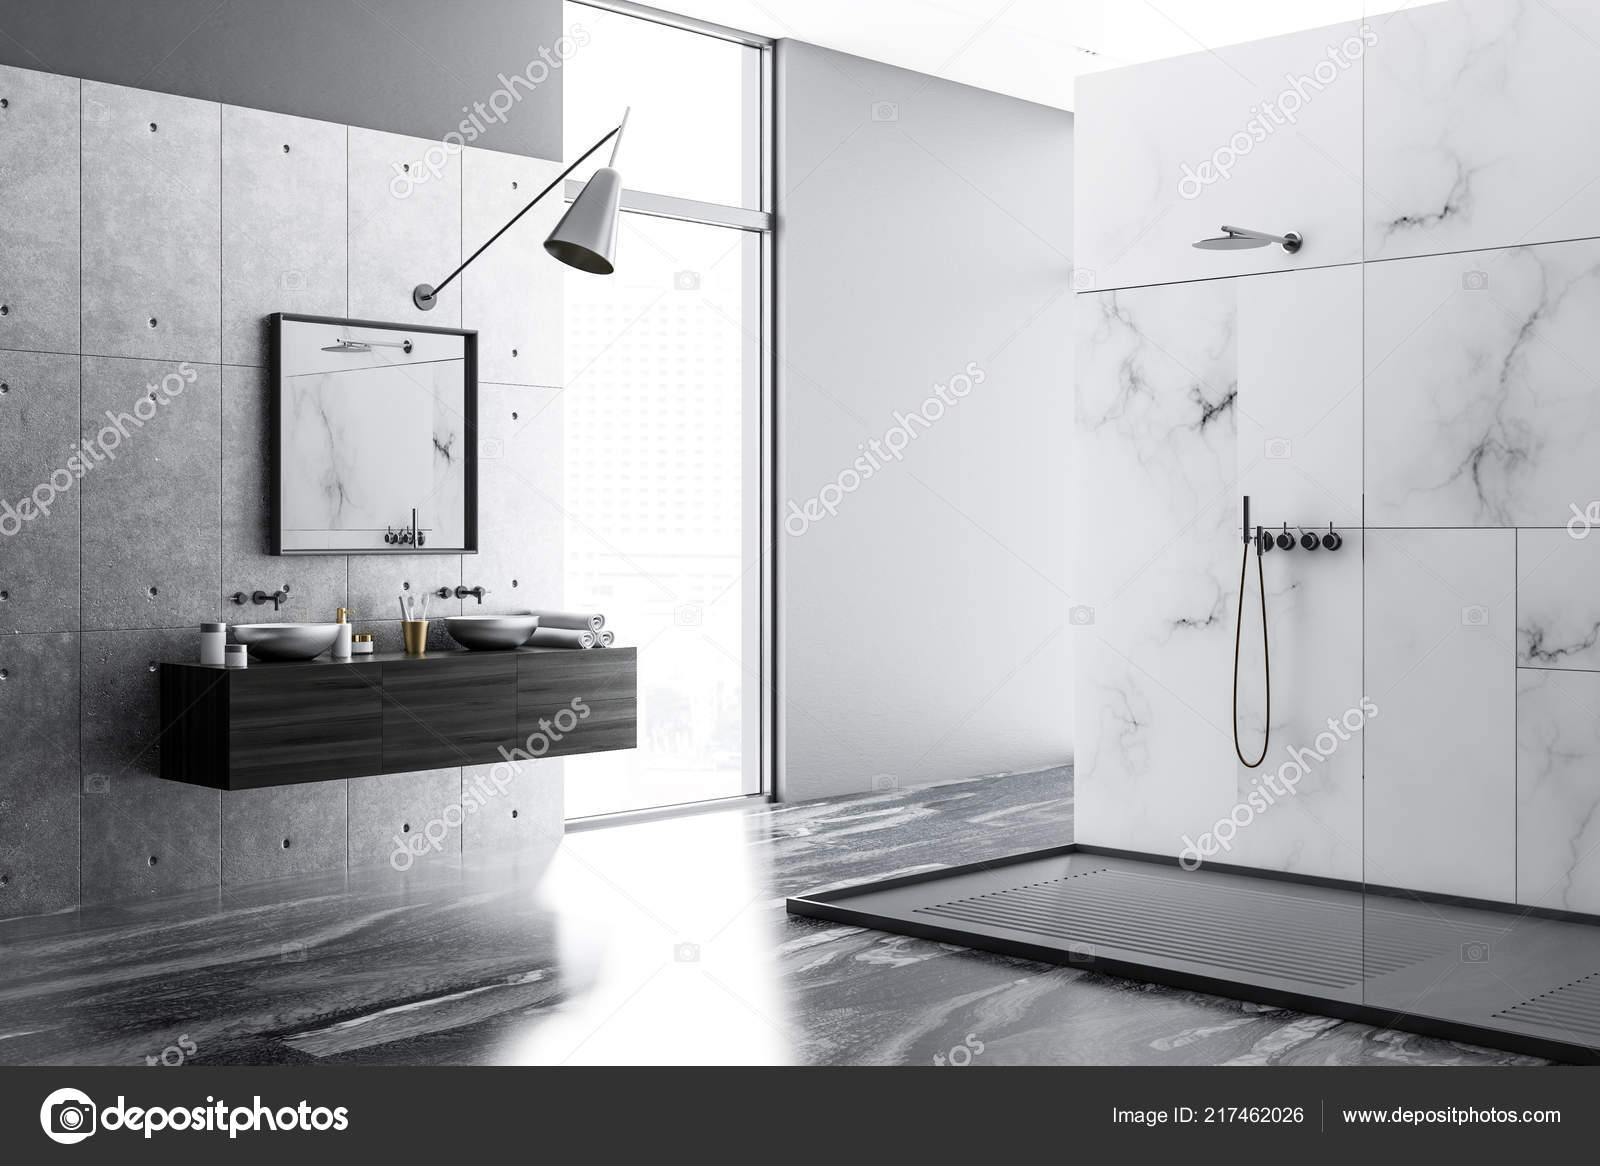 White Marble Bathroom Interior Black Marble Floor Double Sink